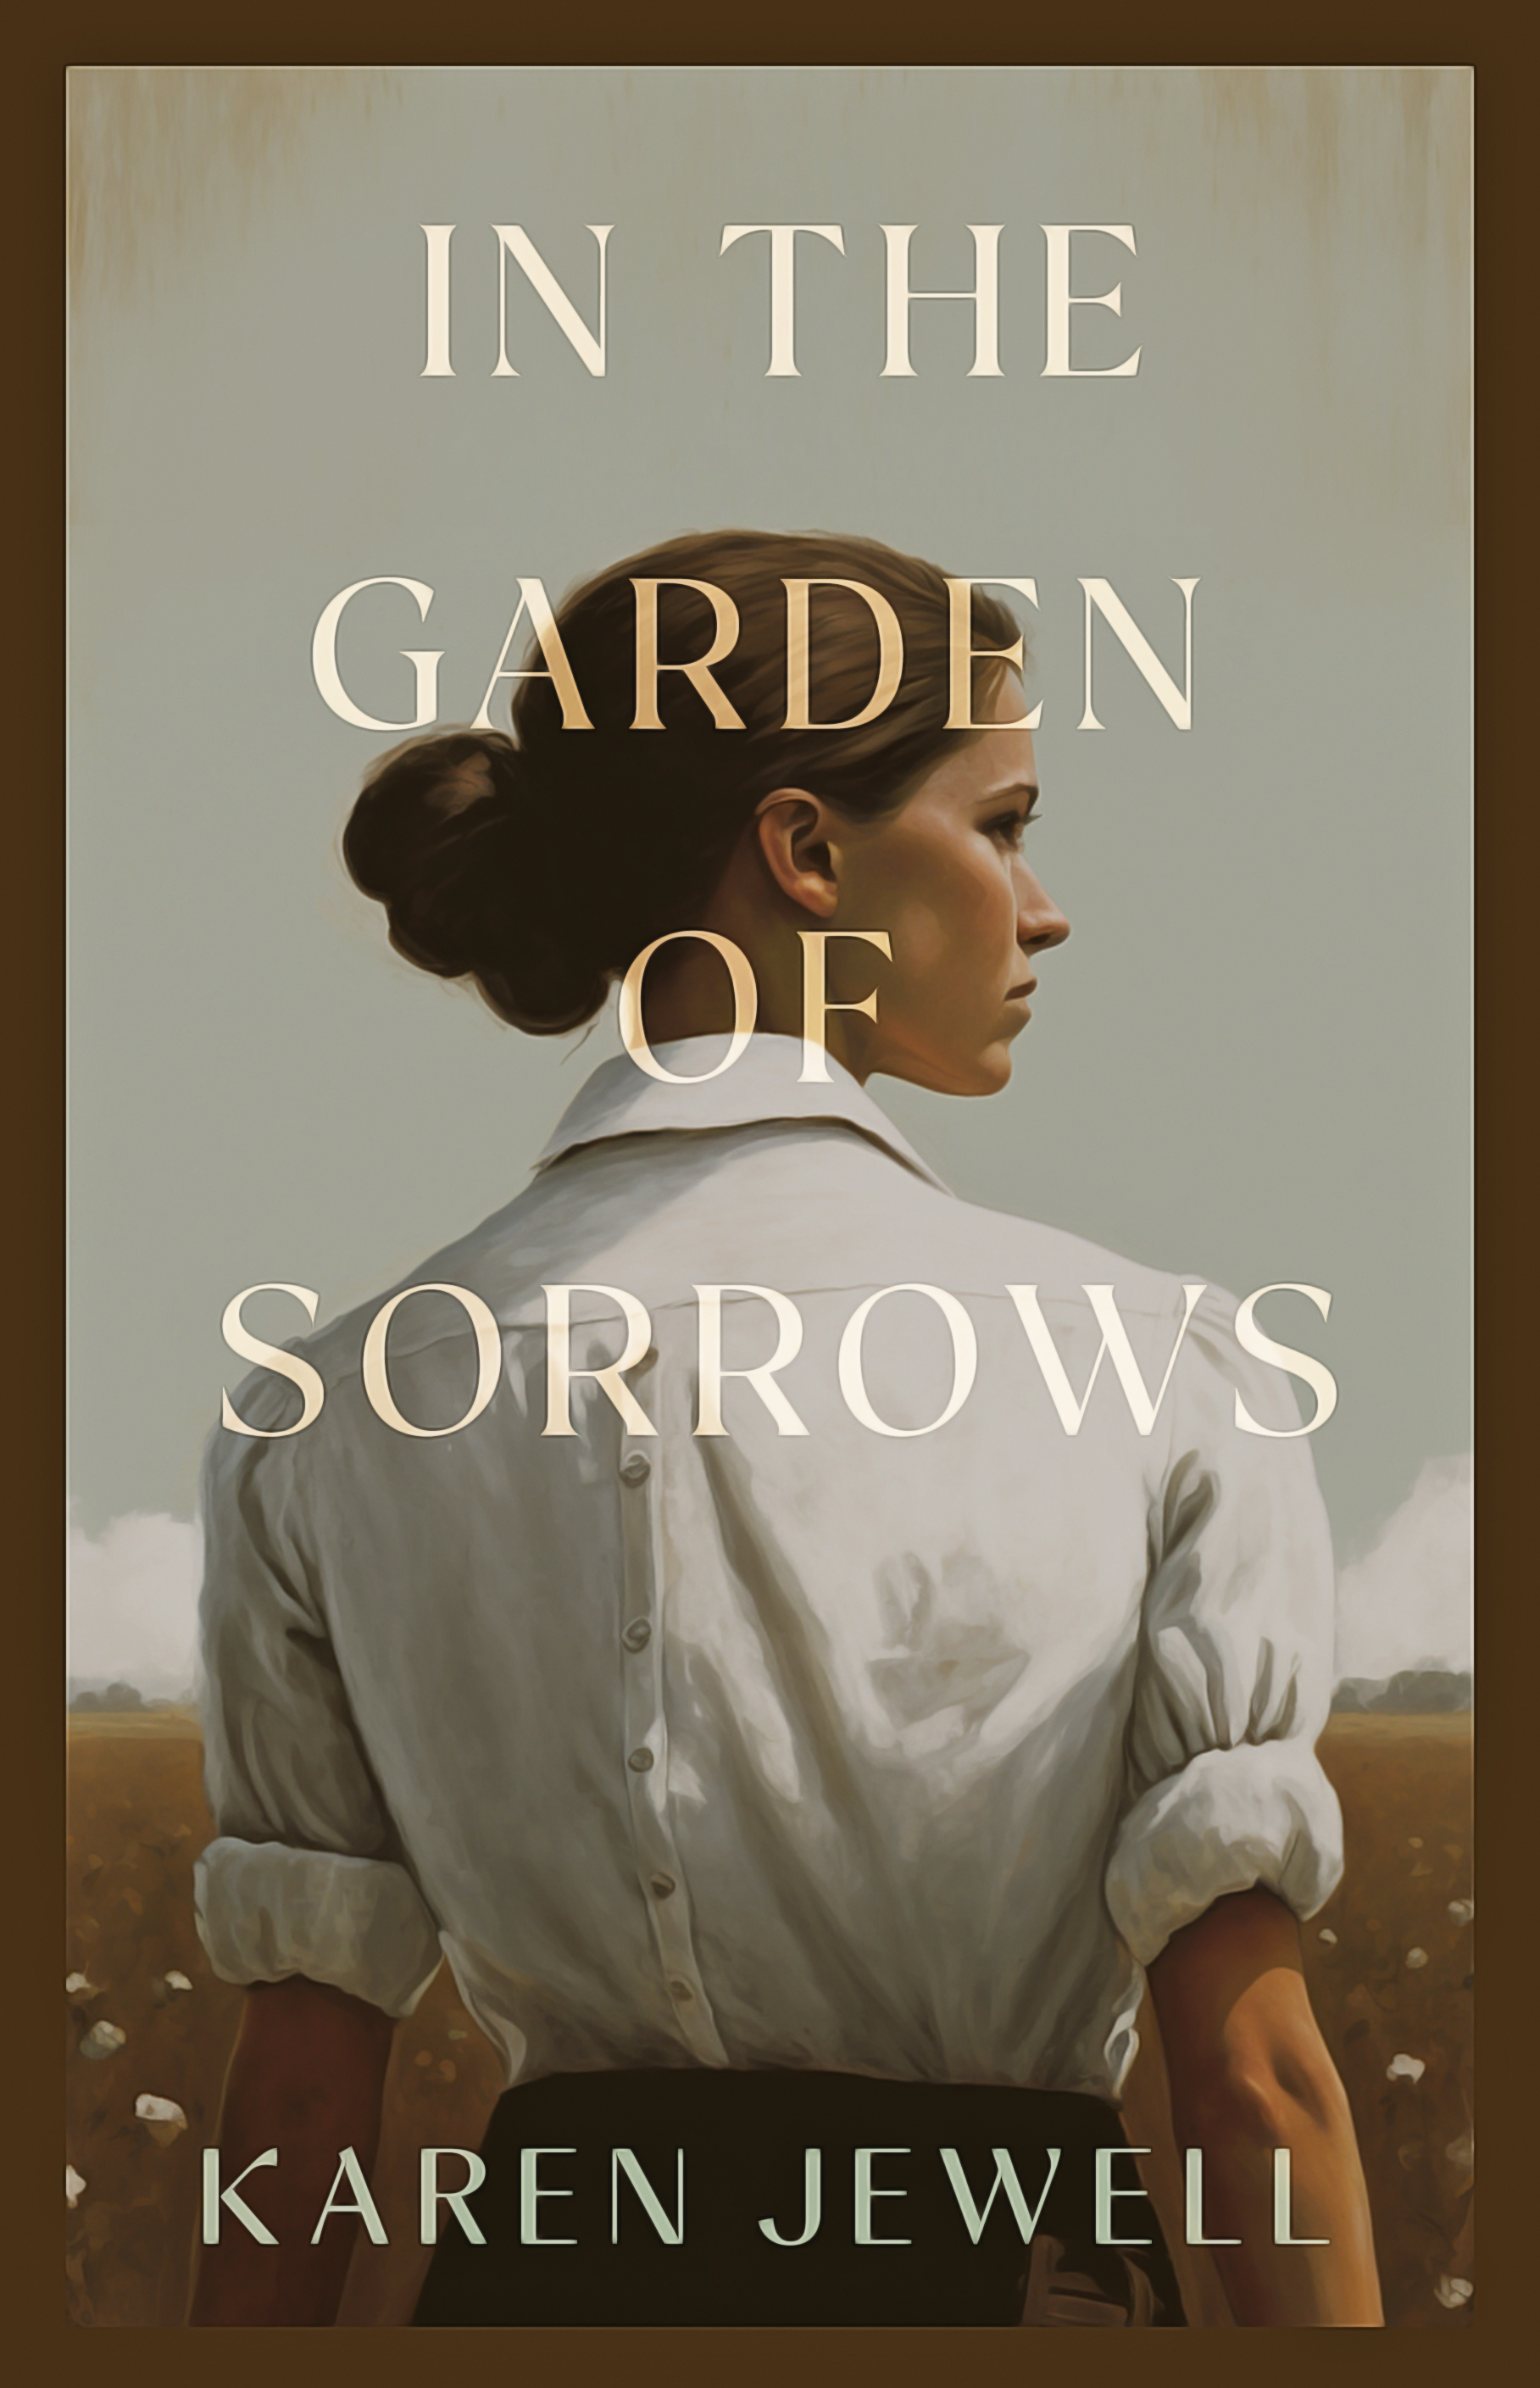 In the Garden of Shadows by Karen Jewell